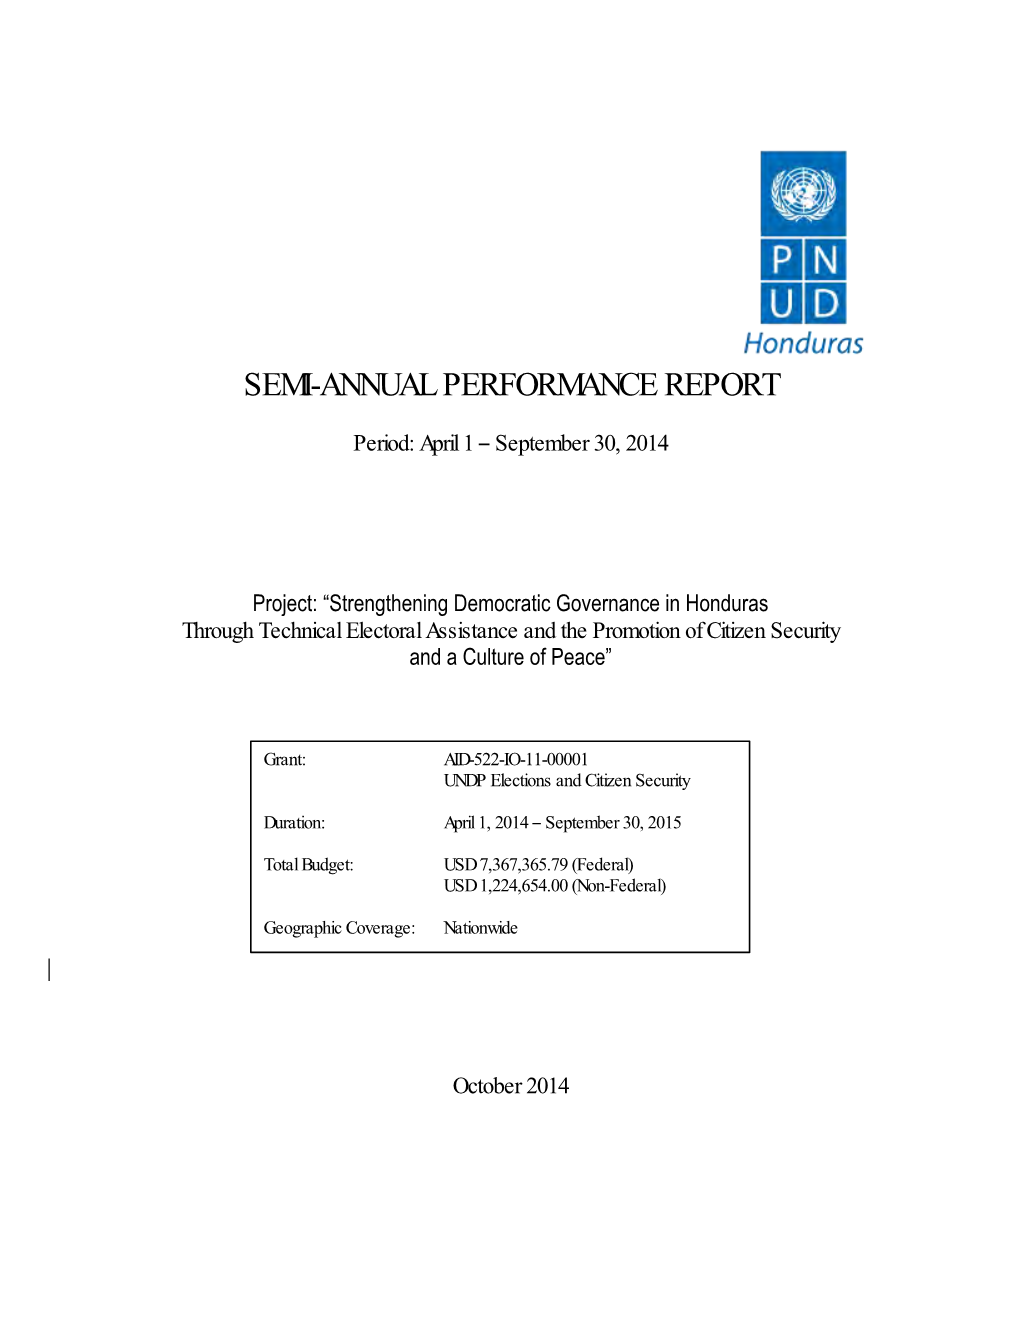 Semi-Annual Performance Report